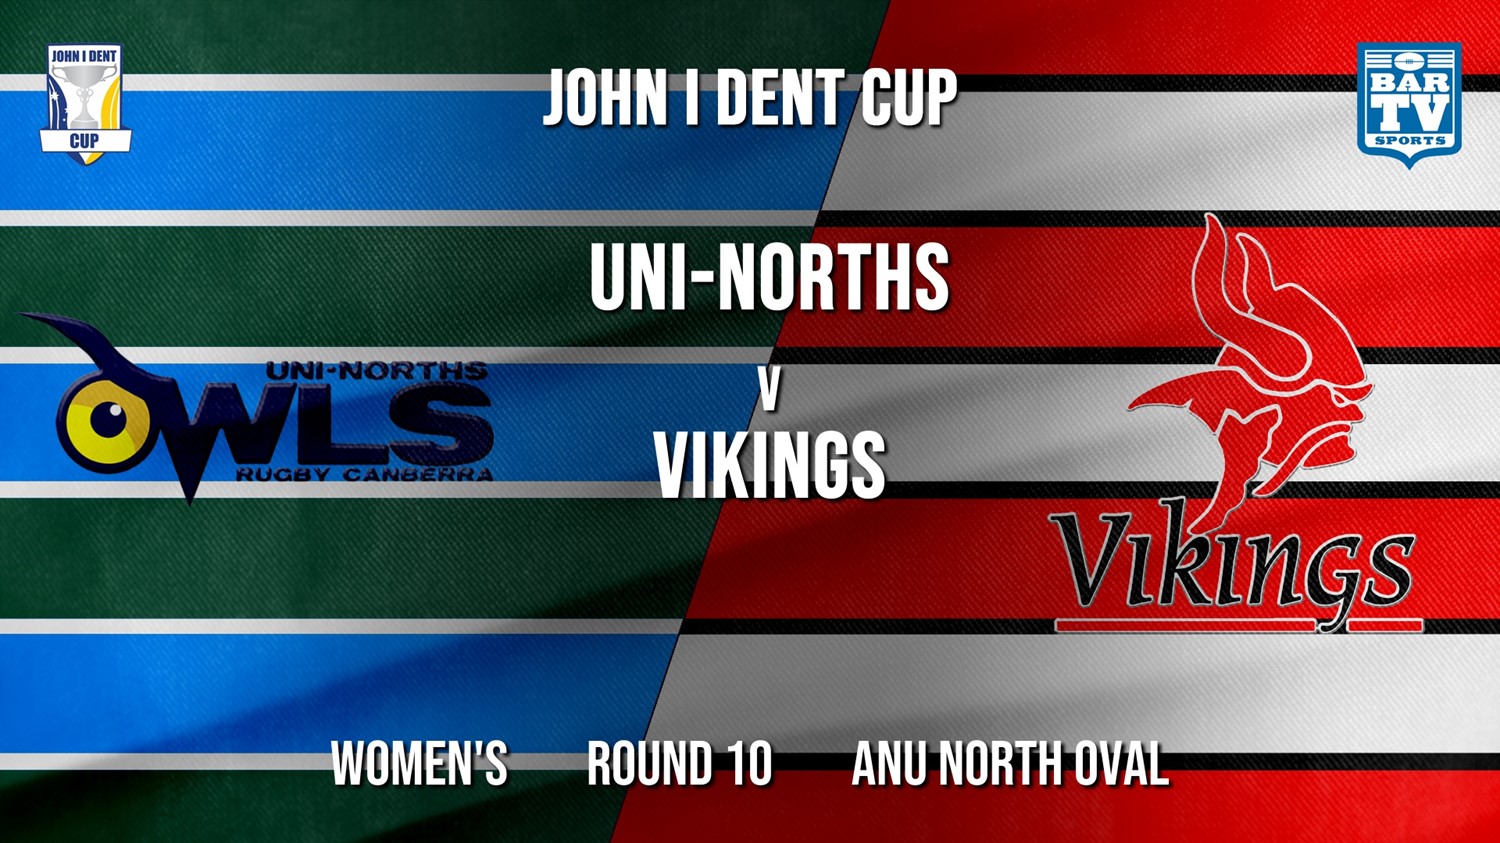 John I Dent Round 10 - Women's - UNI-Norths v Tuggeranong Vikings Minigame Slate Image